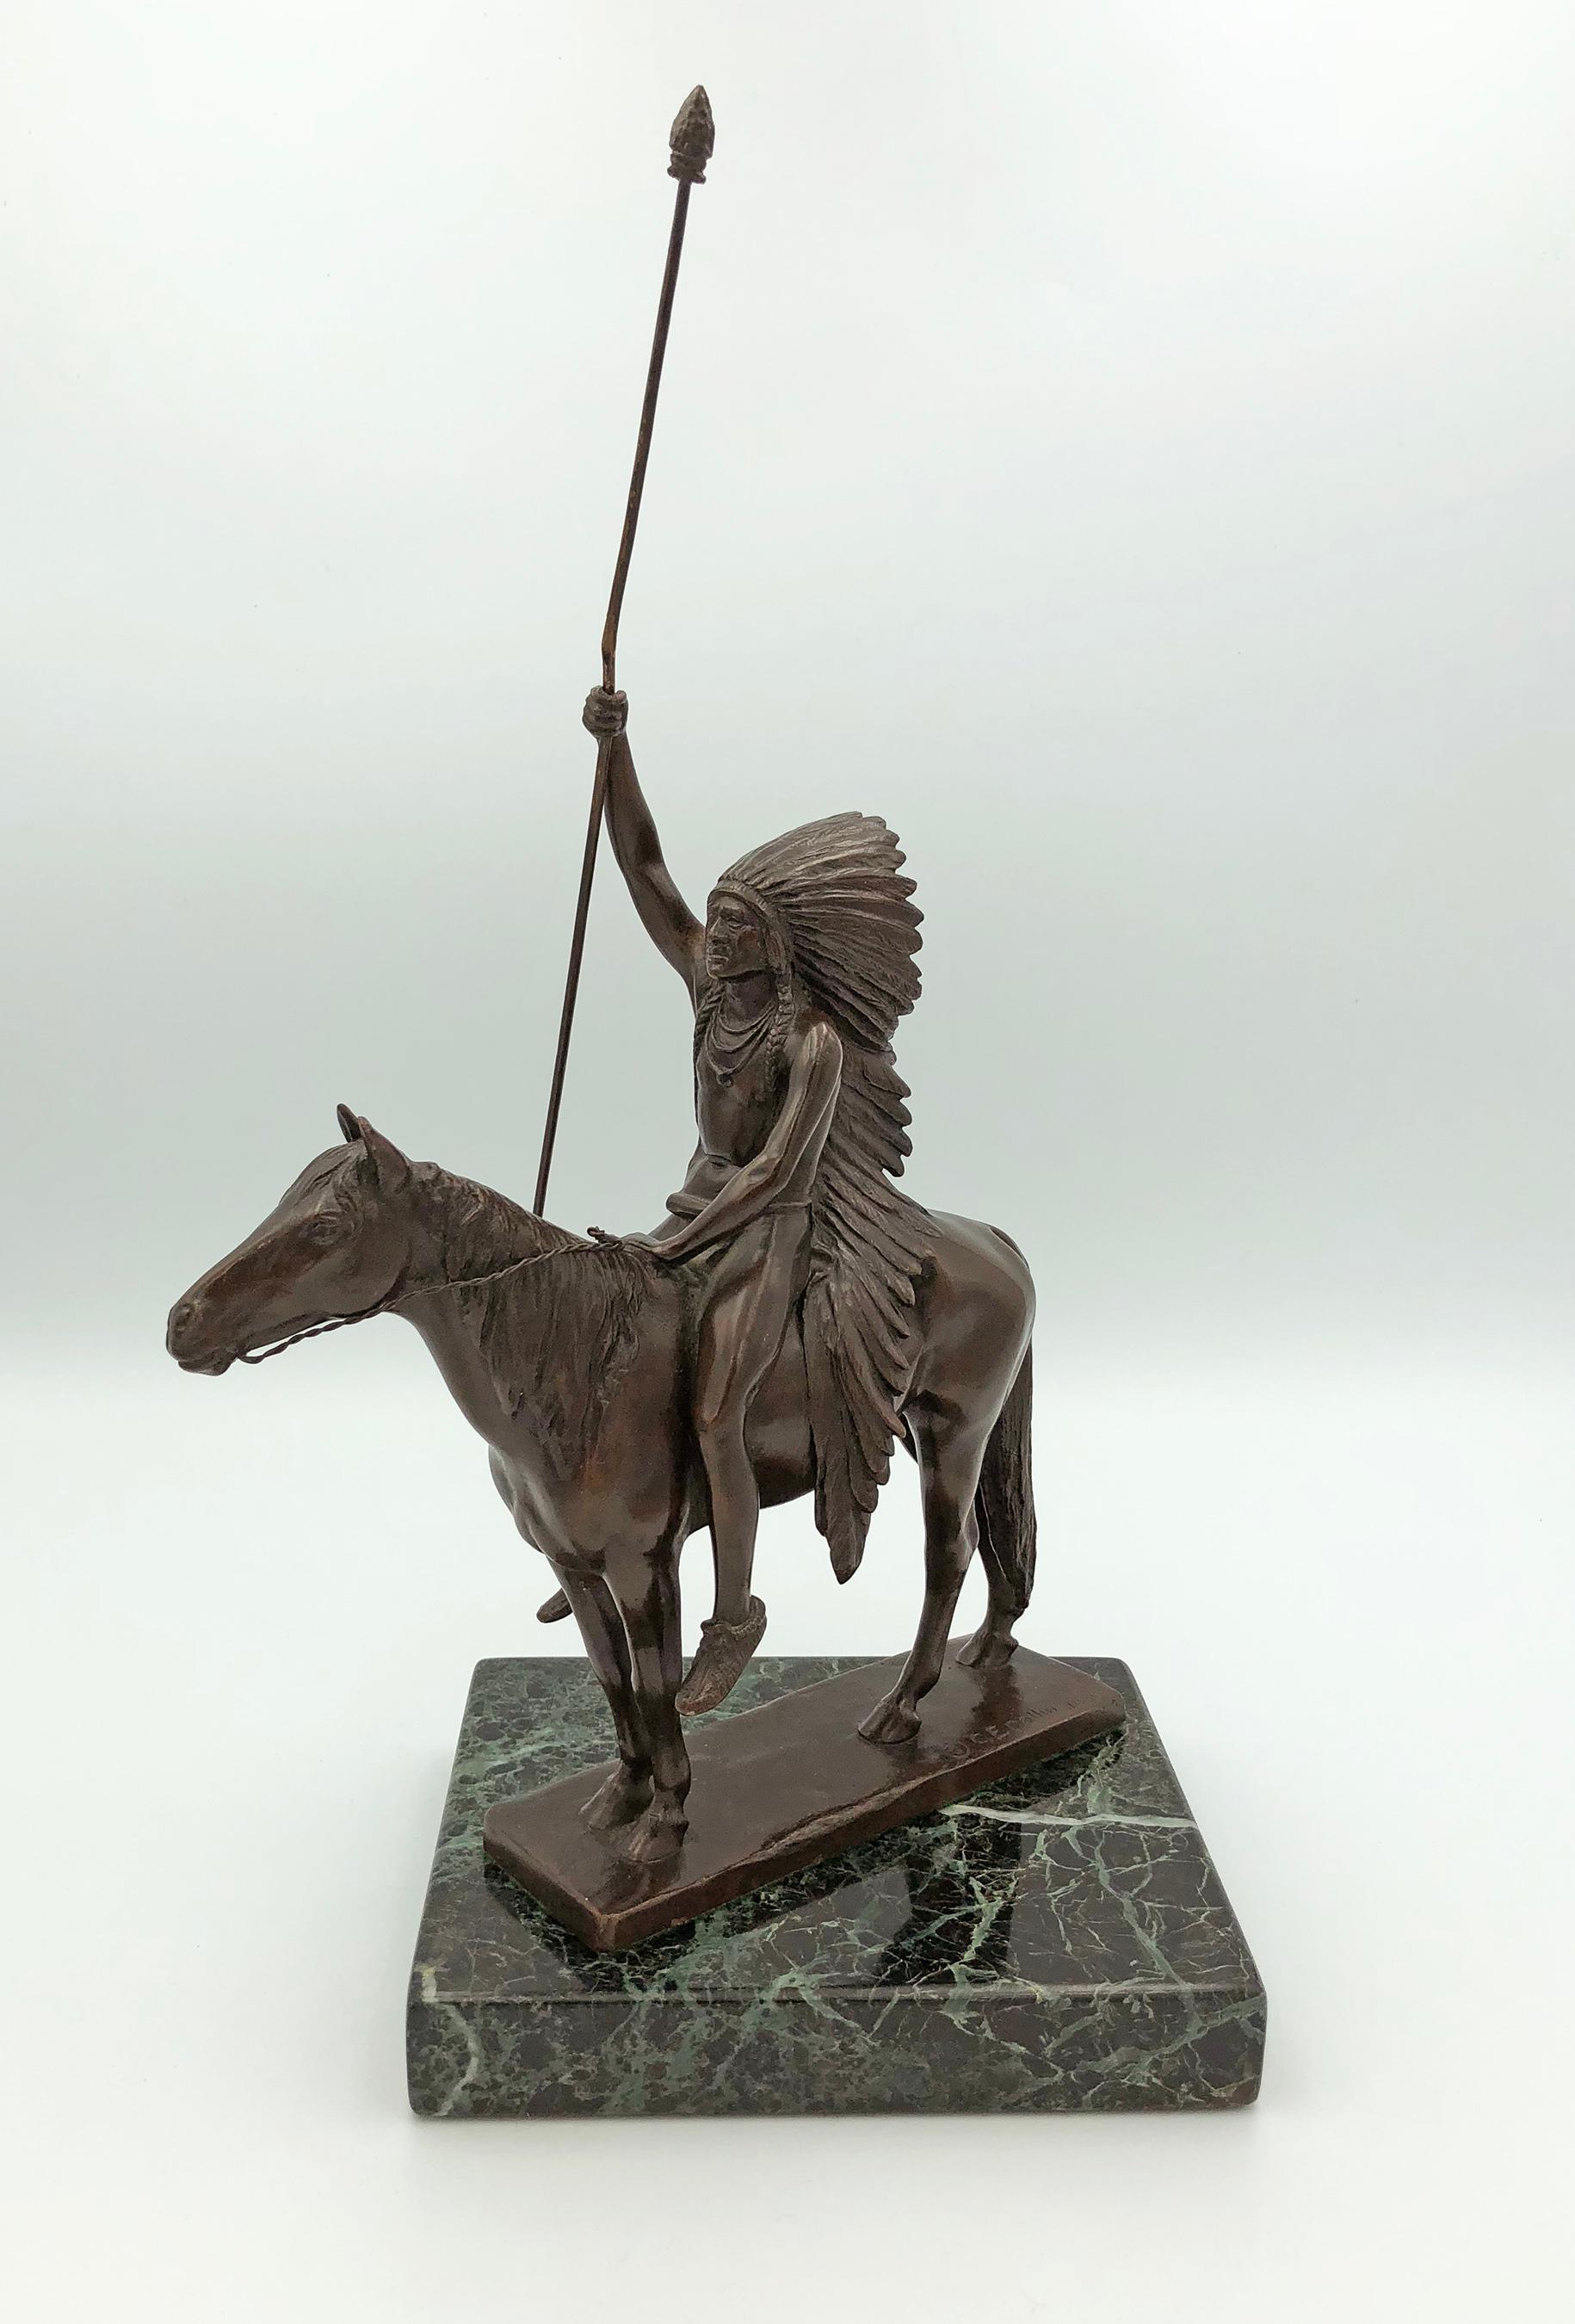 Cyrus Dallin Figurative Sculpture - Signal of Peace